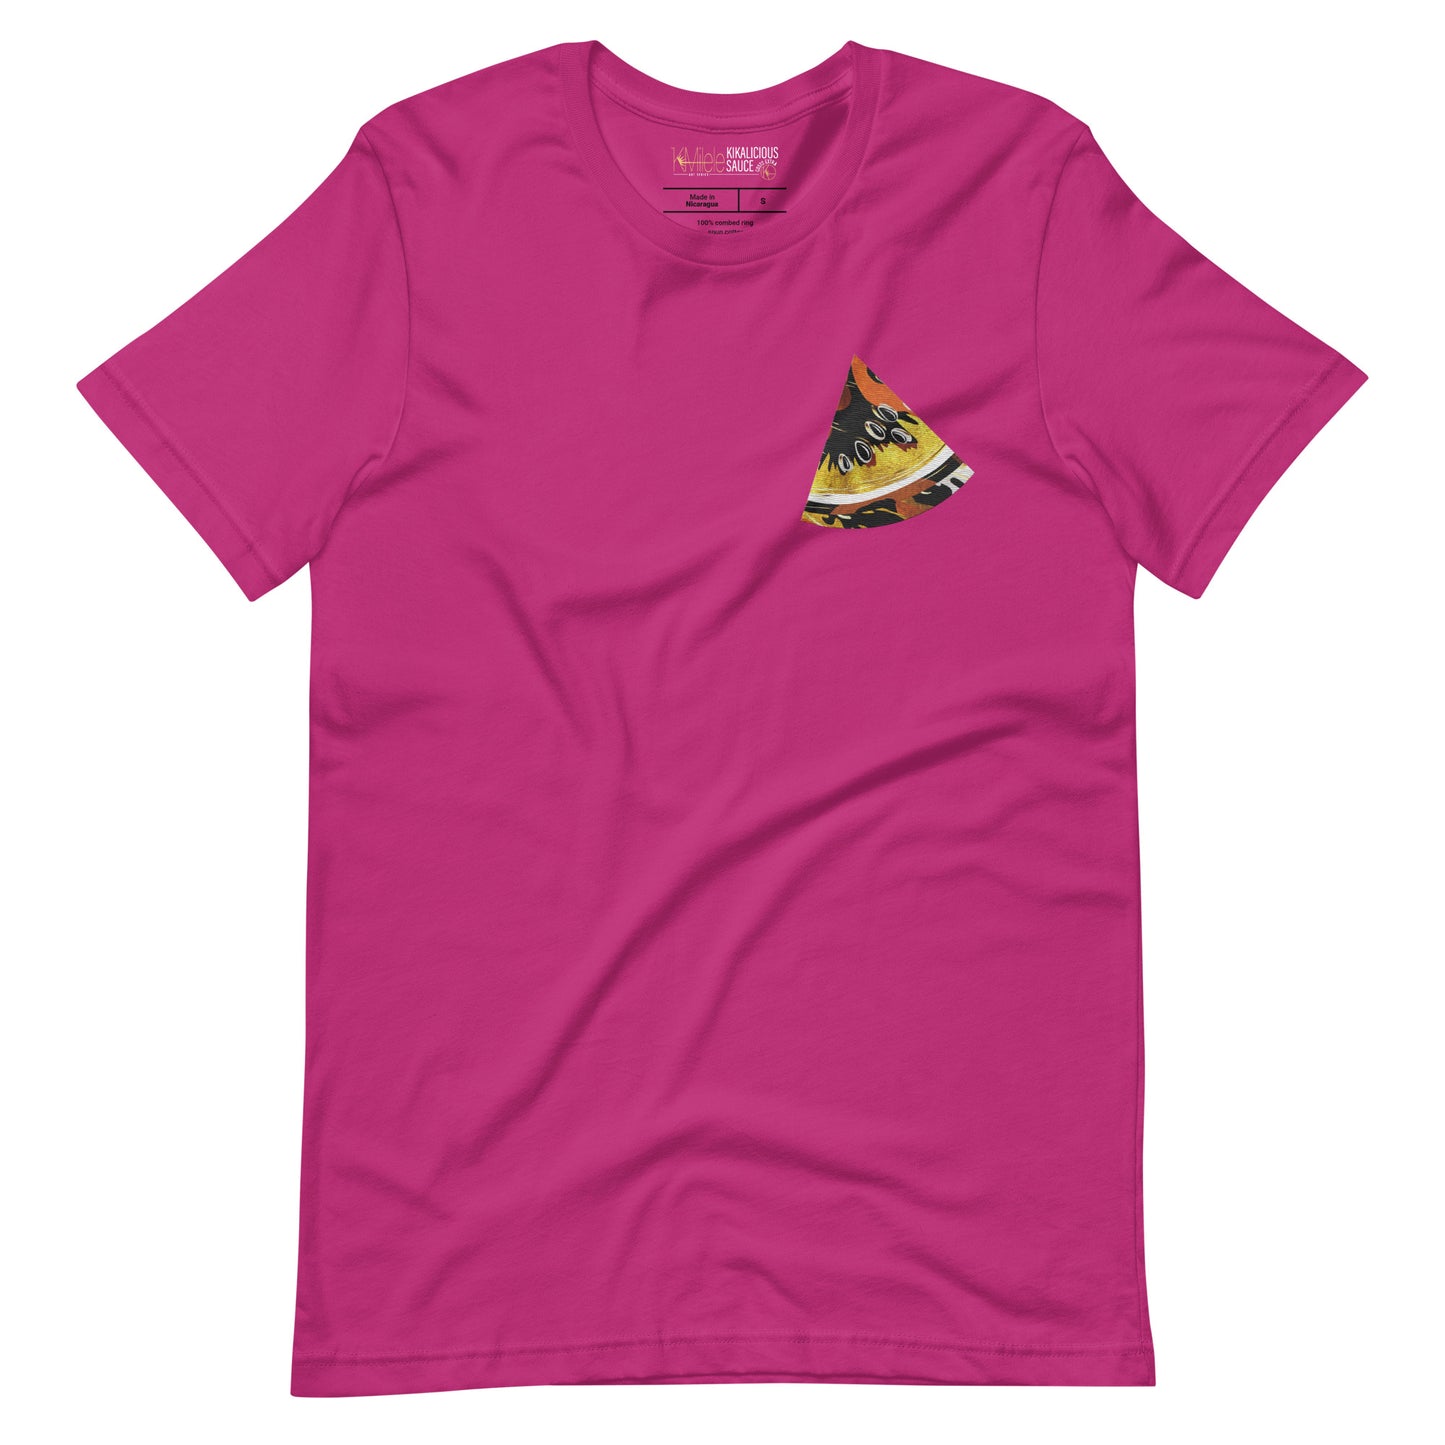 T-Shirt - Watermelon Slice